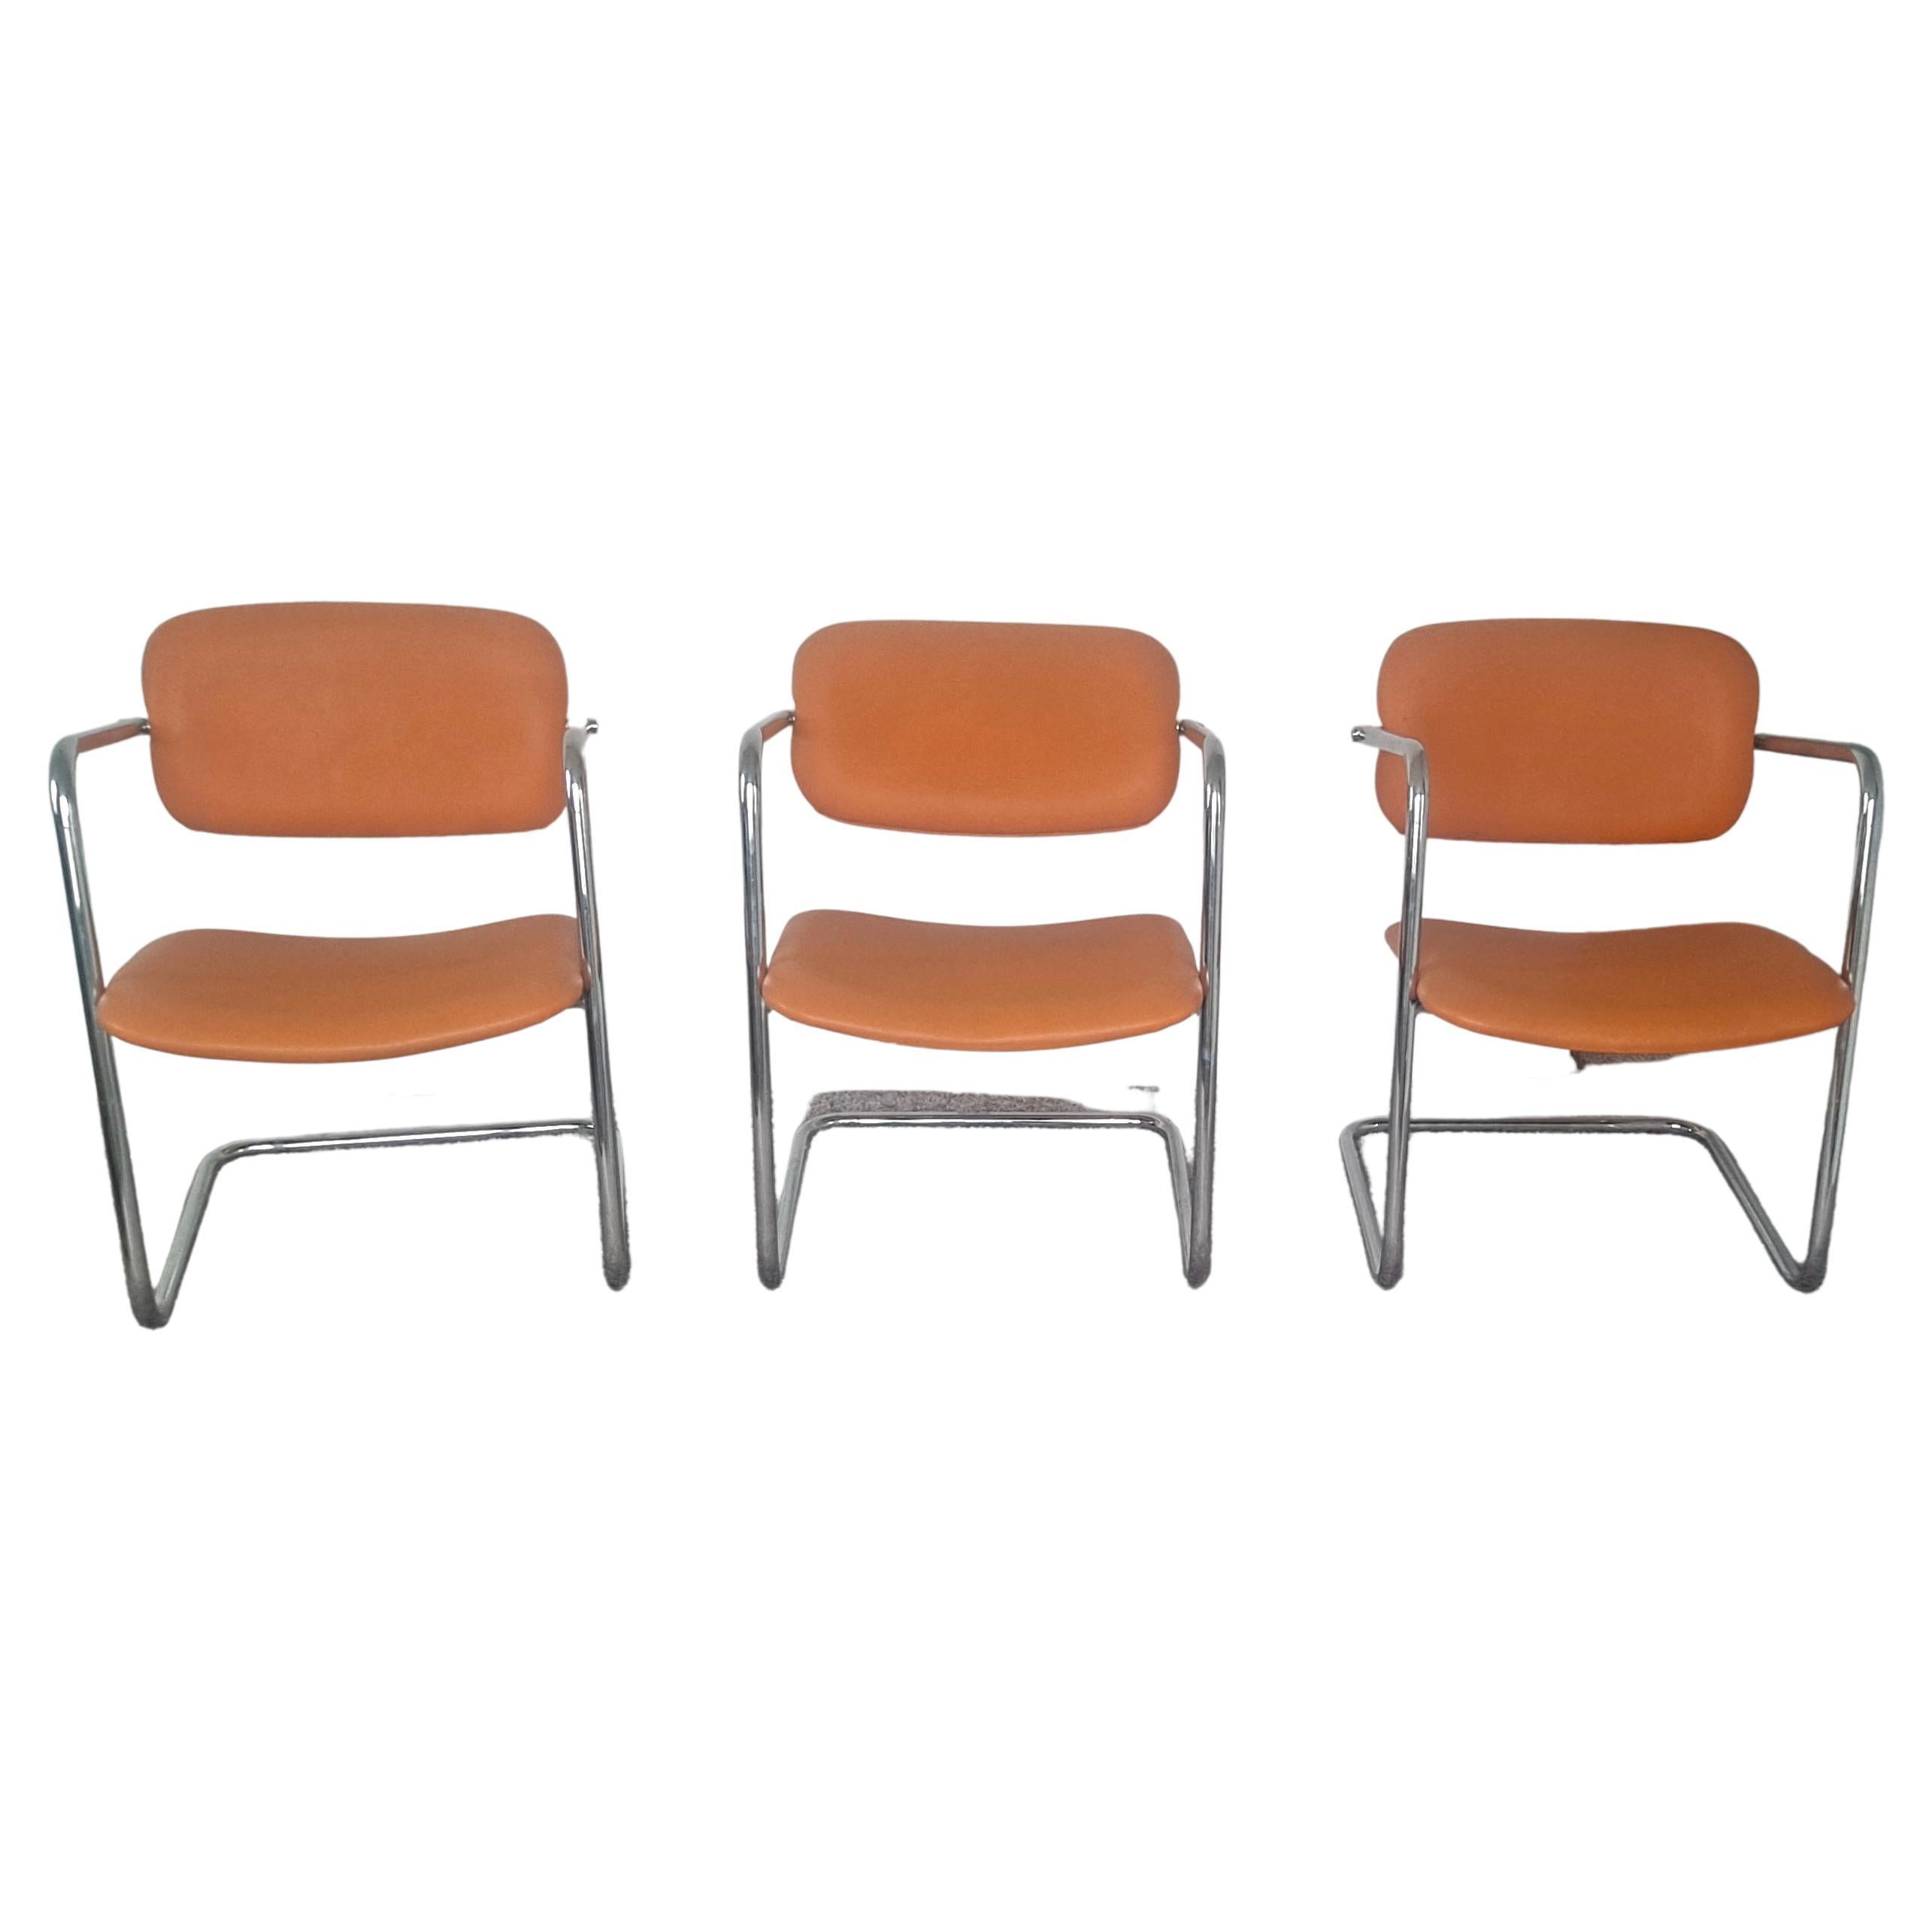 Scandinavian Set of Three Mid century Chairs  